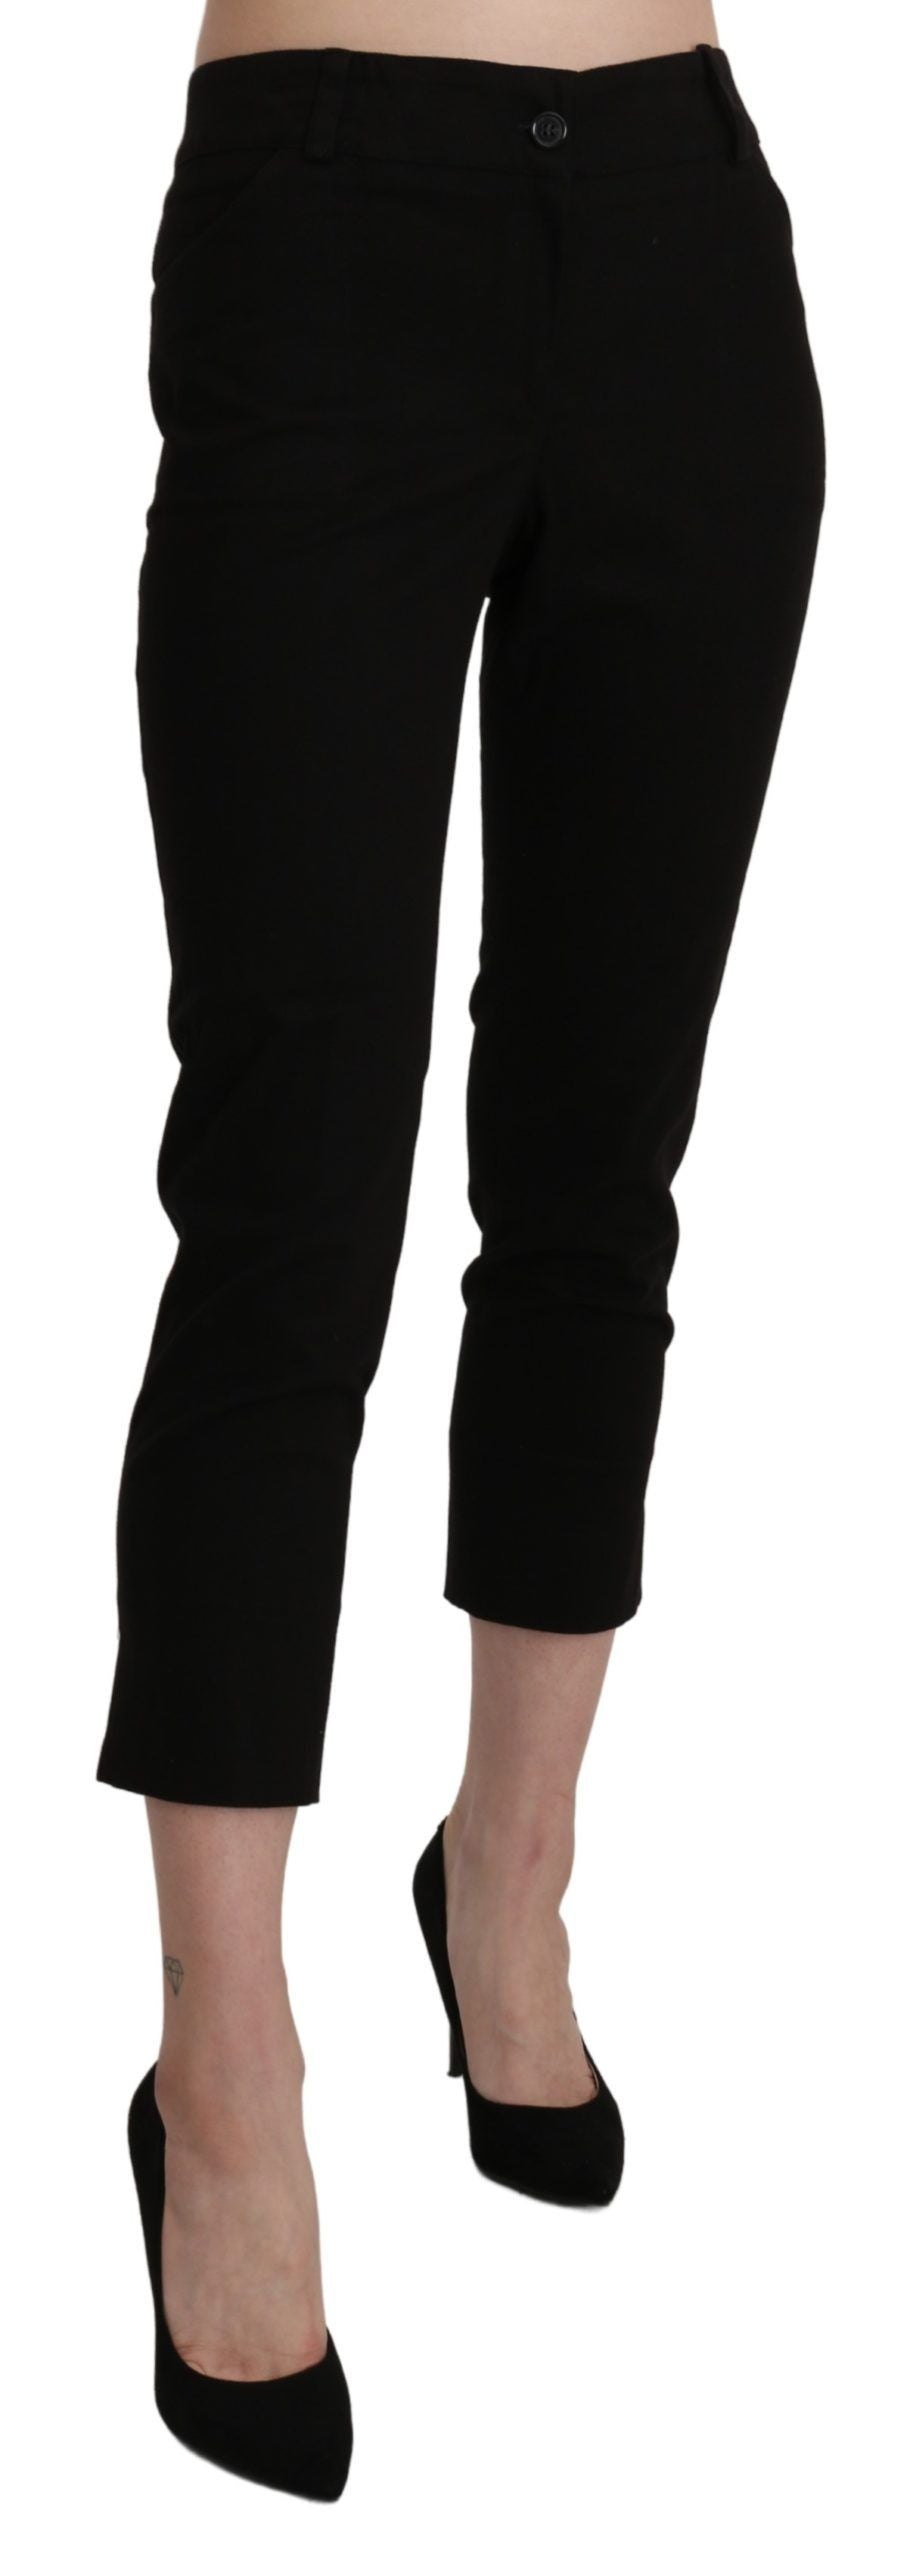 Bencivenga schwarz hohe Taille dünne Kleidungshosen Hosen Hosen